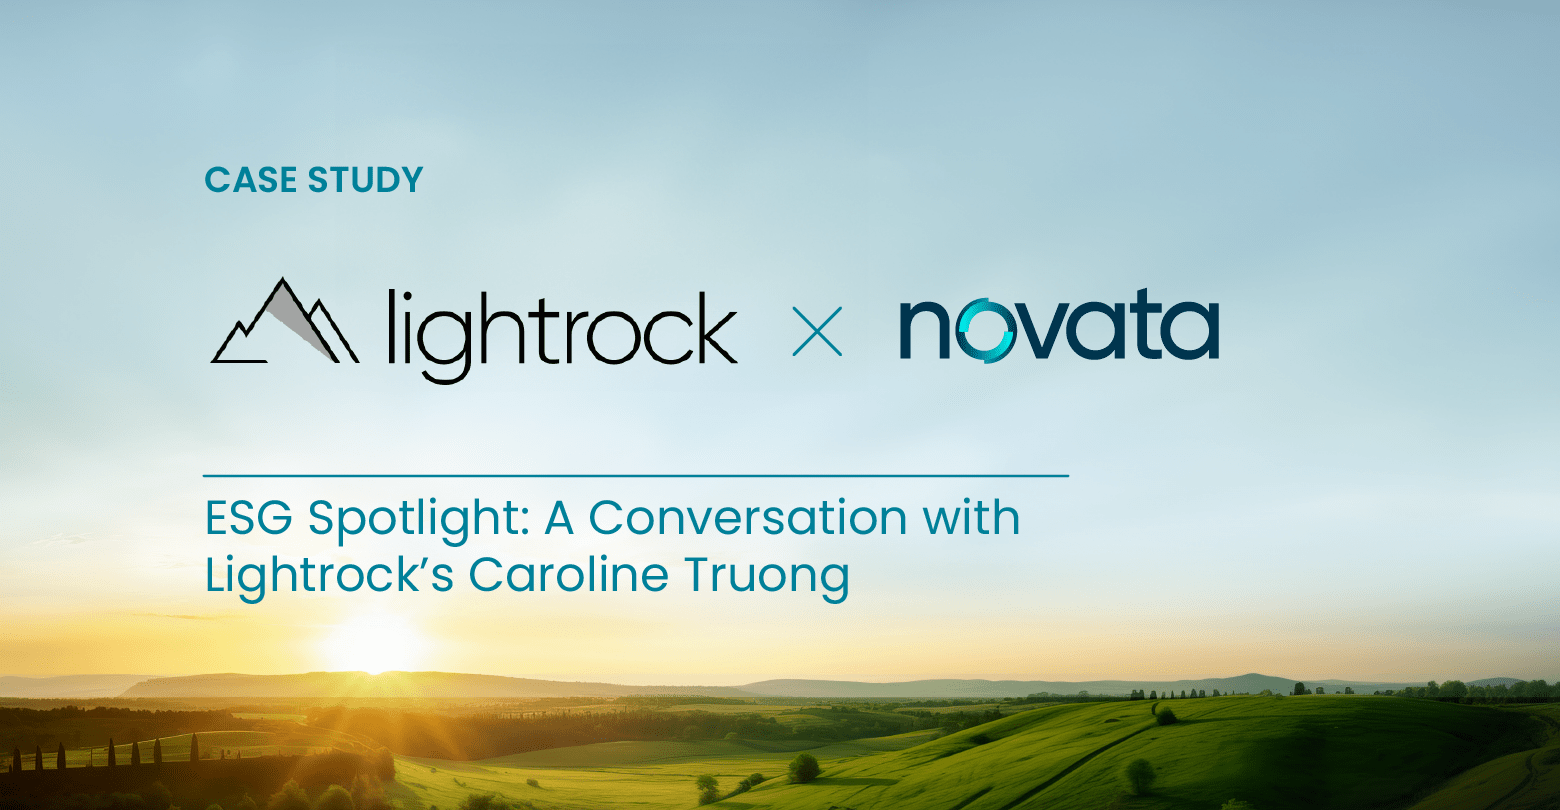 Case Study: Lightrock x Novata. ESG Spotlight: A Conversation with Lightrock's Caroline Truong